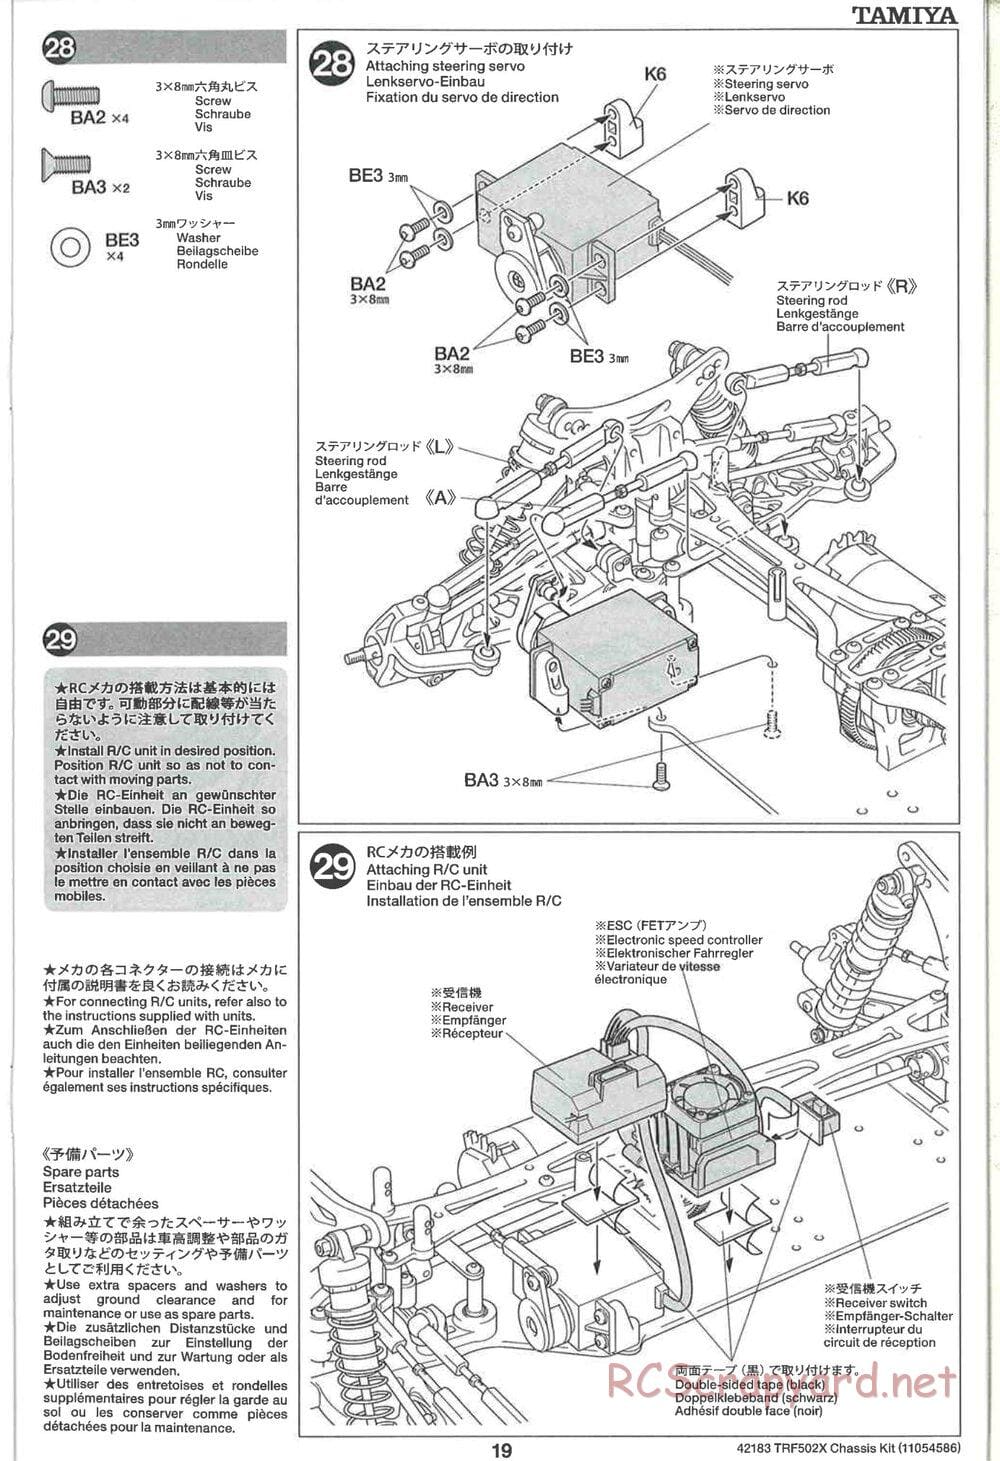 Tamiya - TRF502X Chassis - Manual - Page 19